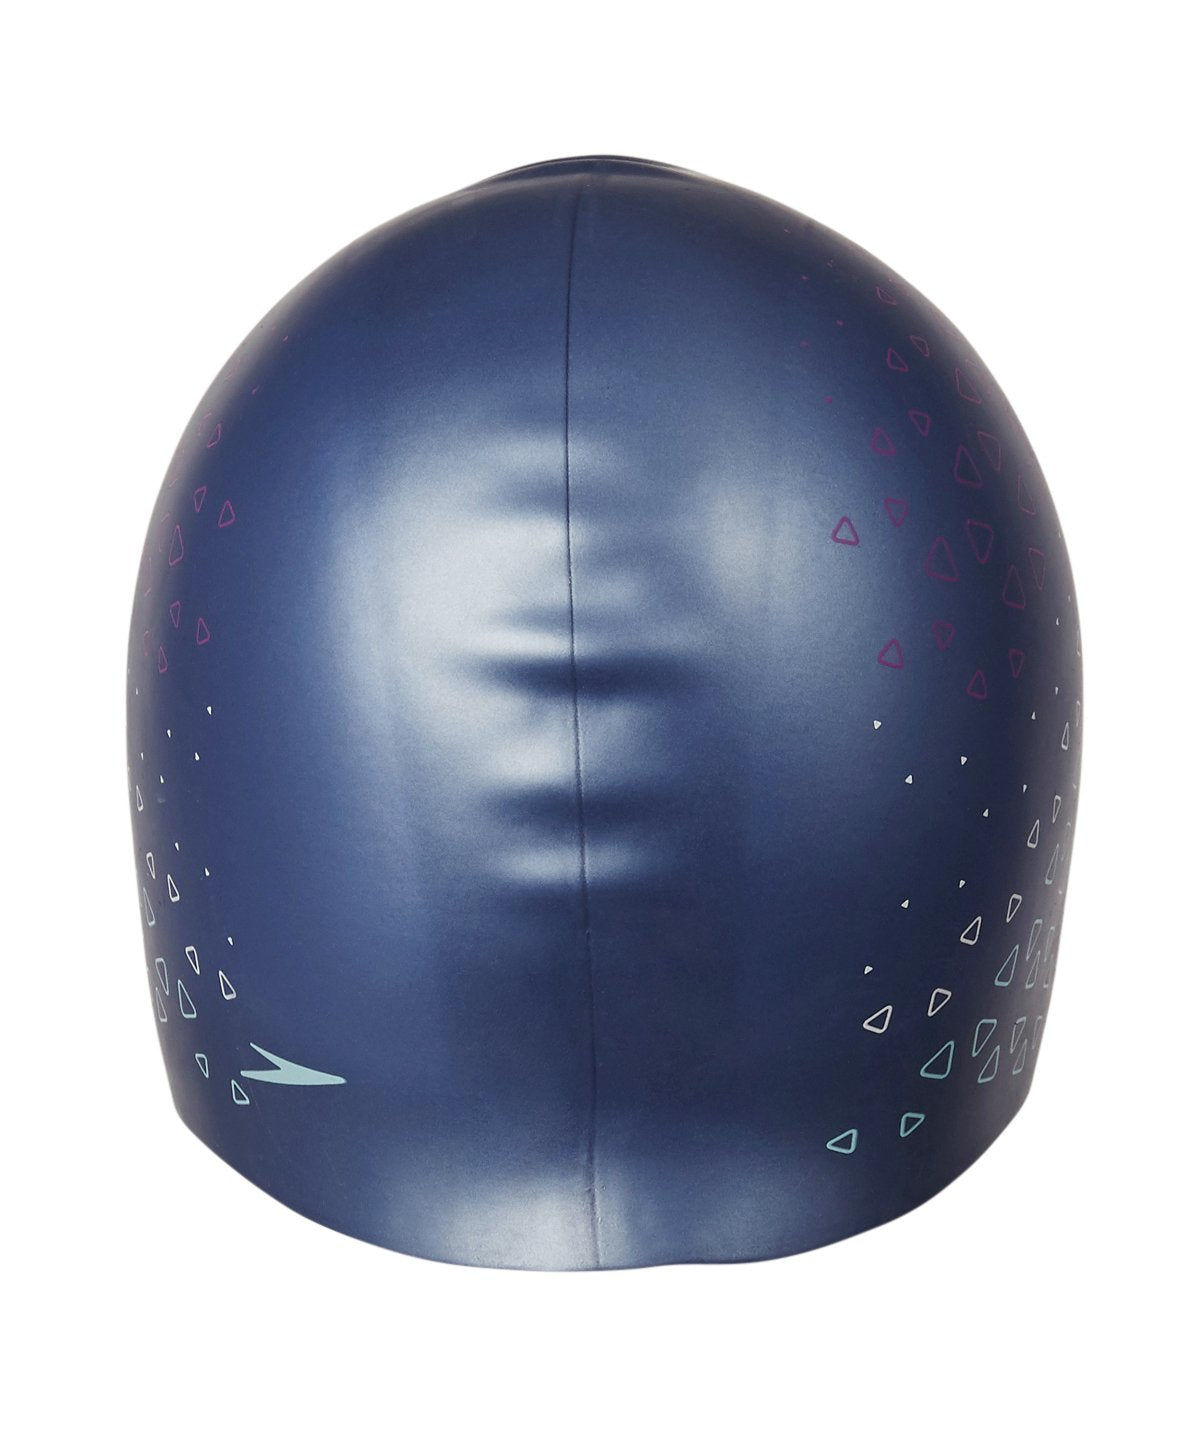 Speedo Unisex-Adult Luna Vision Reversible Swimcap - Best Price online Prokicksports.com